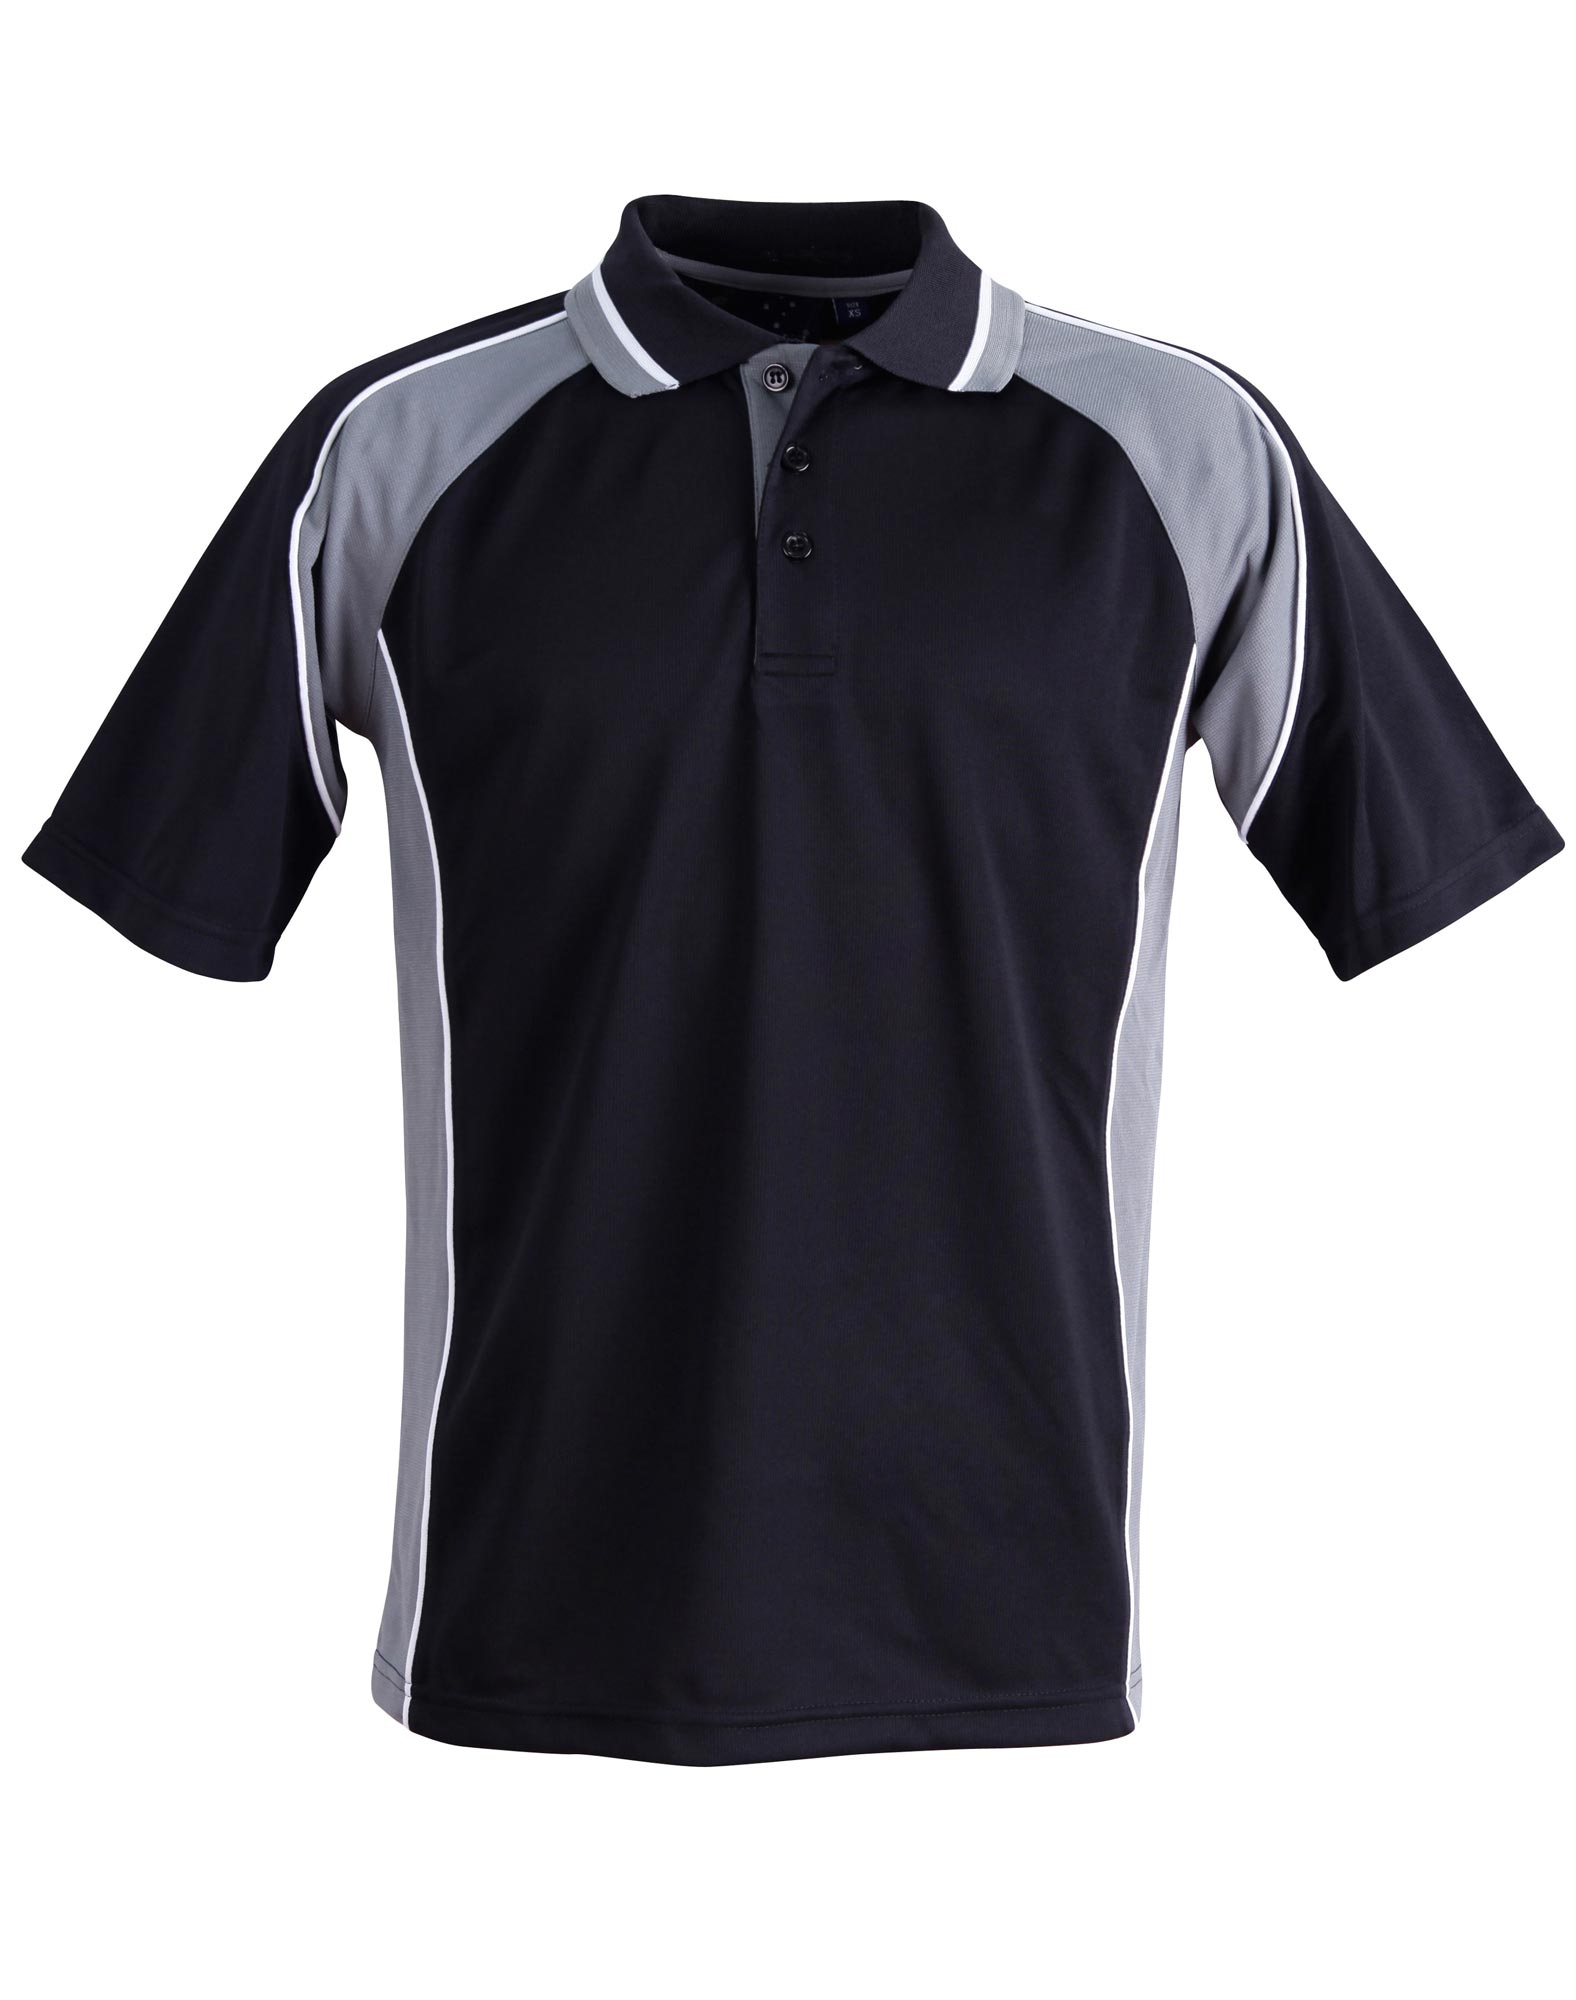 Custom (Black-Ash) Mascot Sublimated Polo Shirts Online Perth Australia